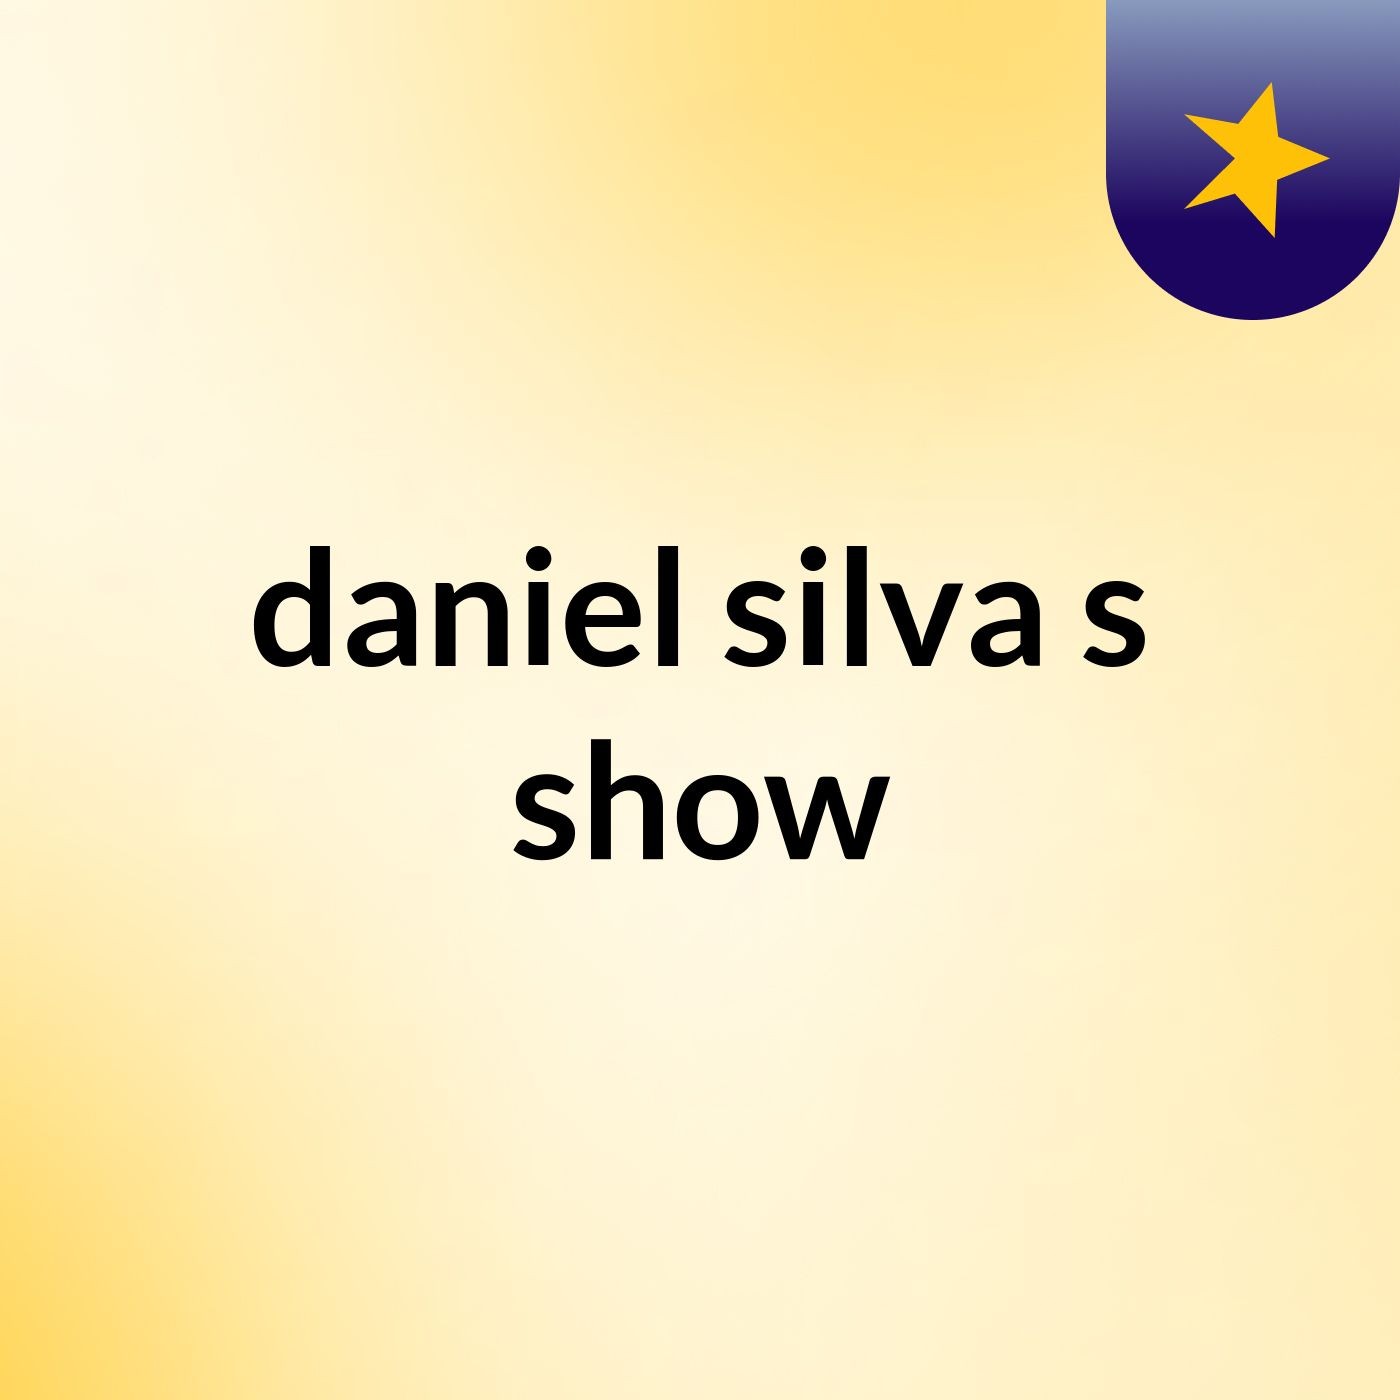 daniel silva's show